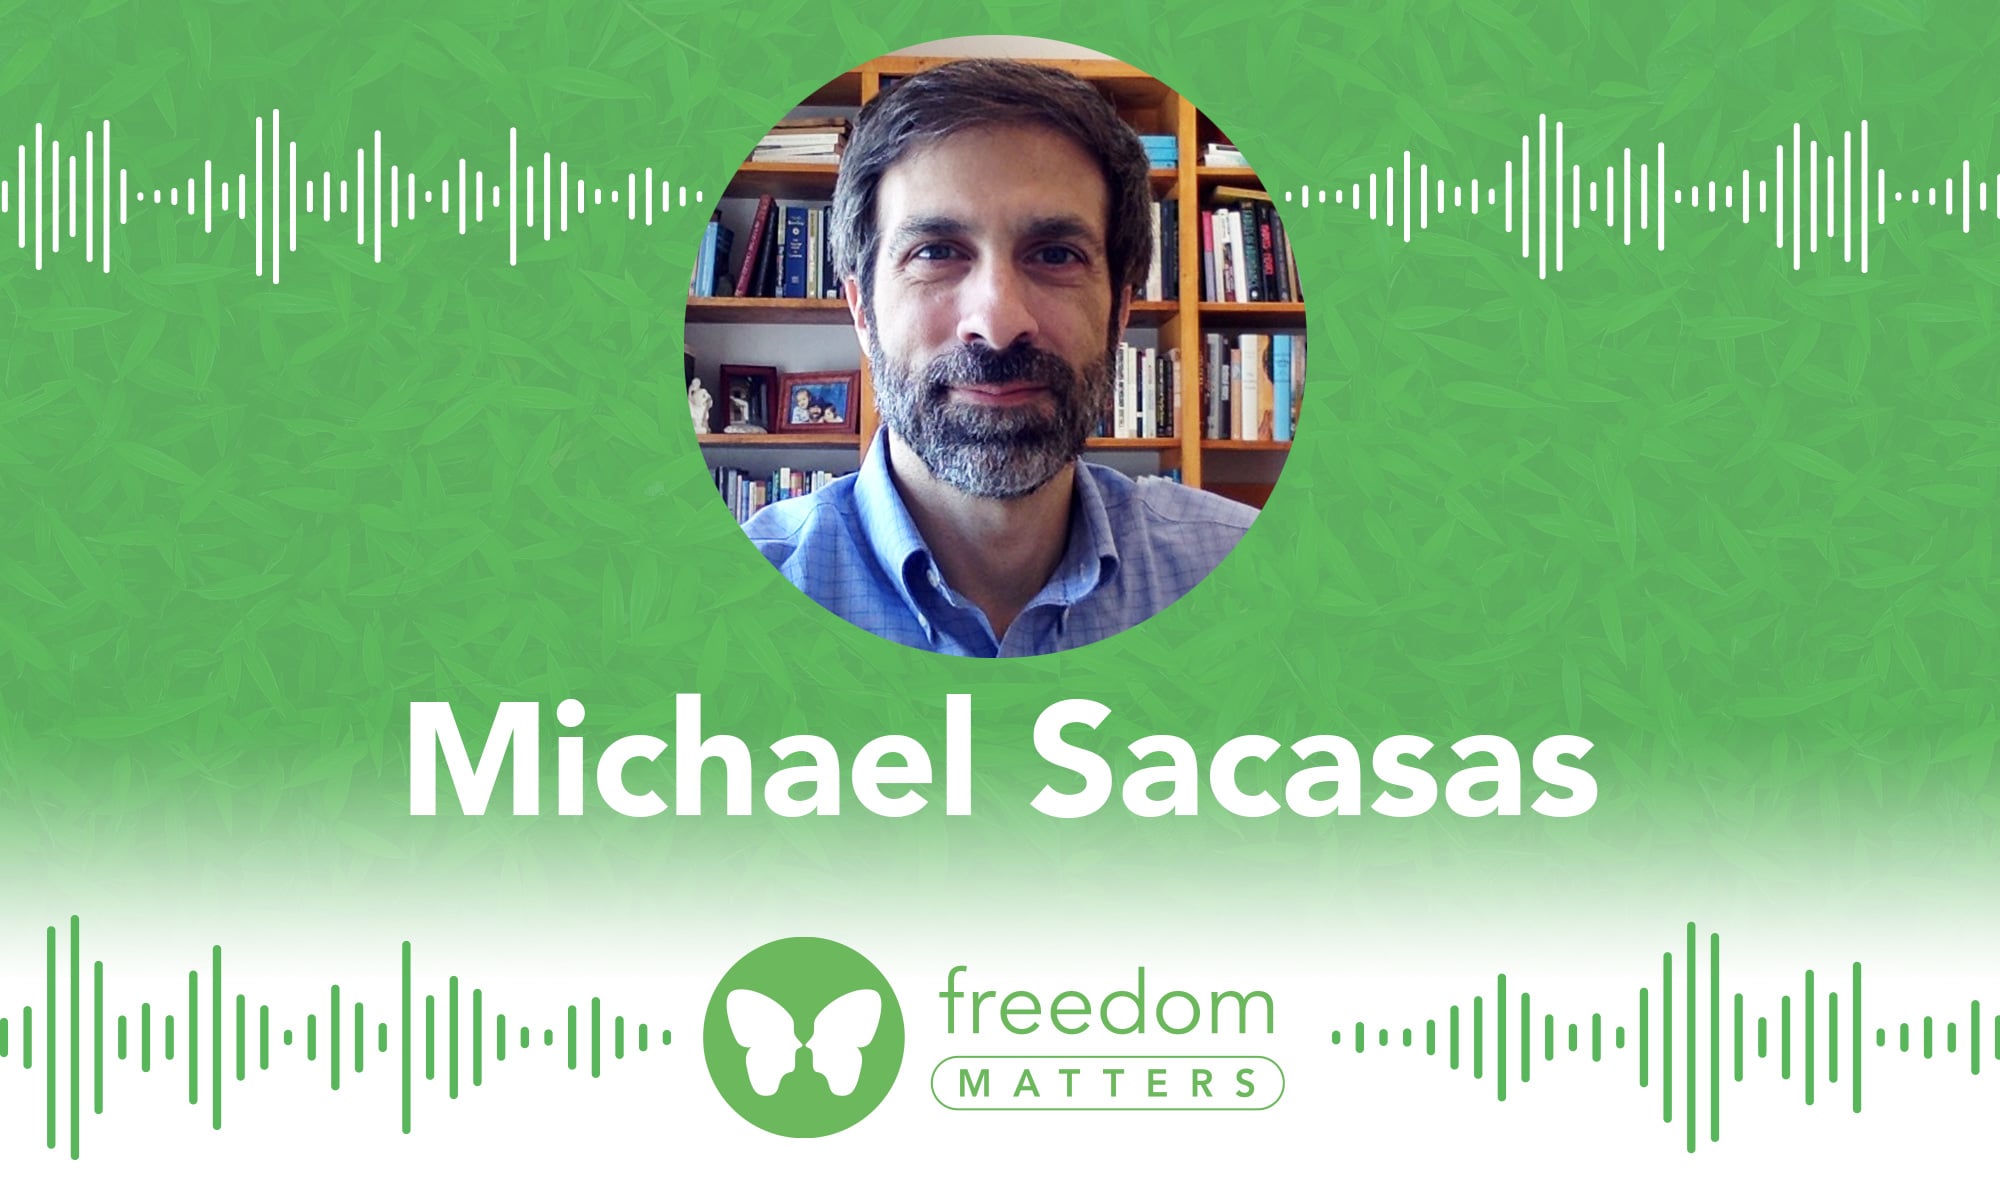 Michael Sacasas Freedom Matters